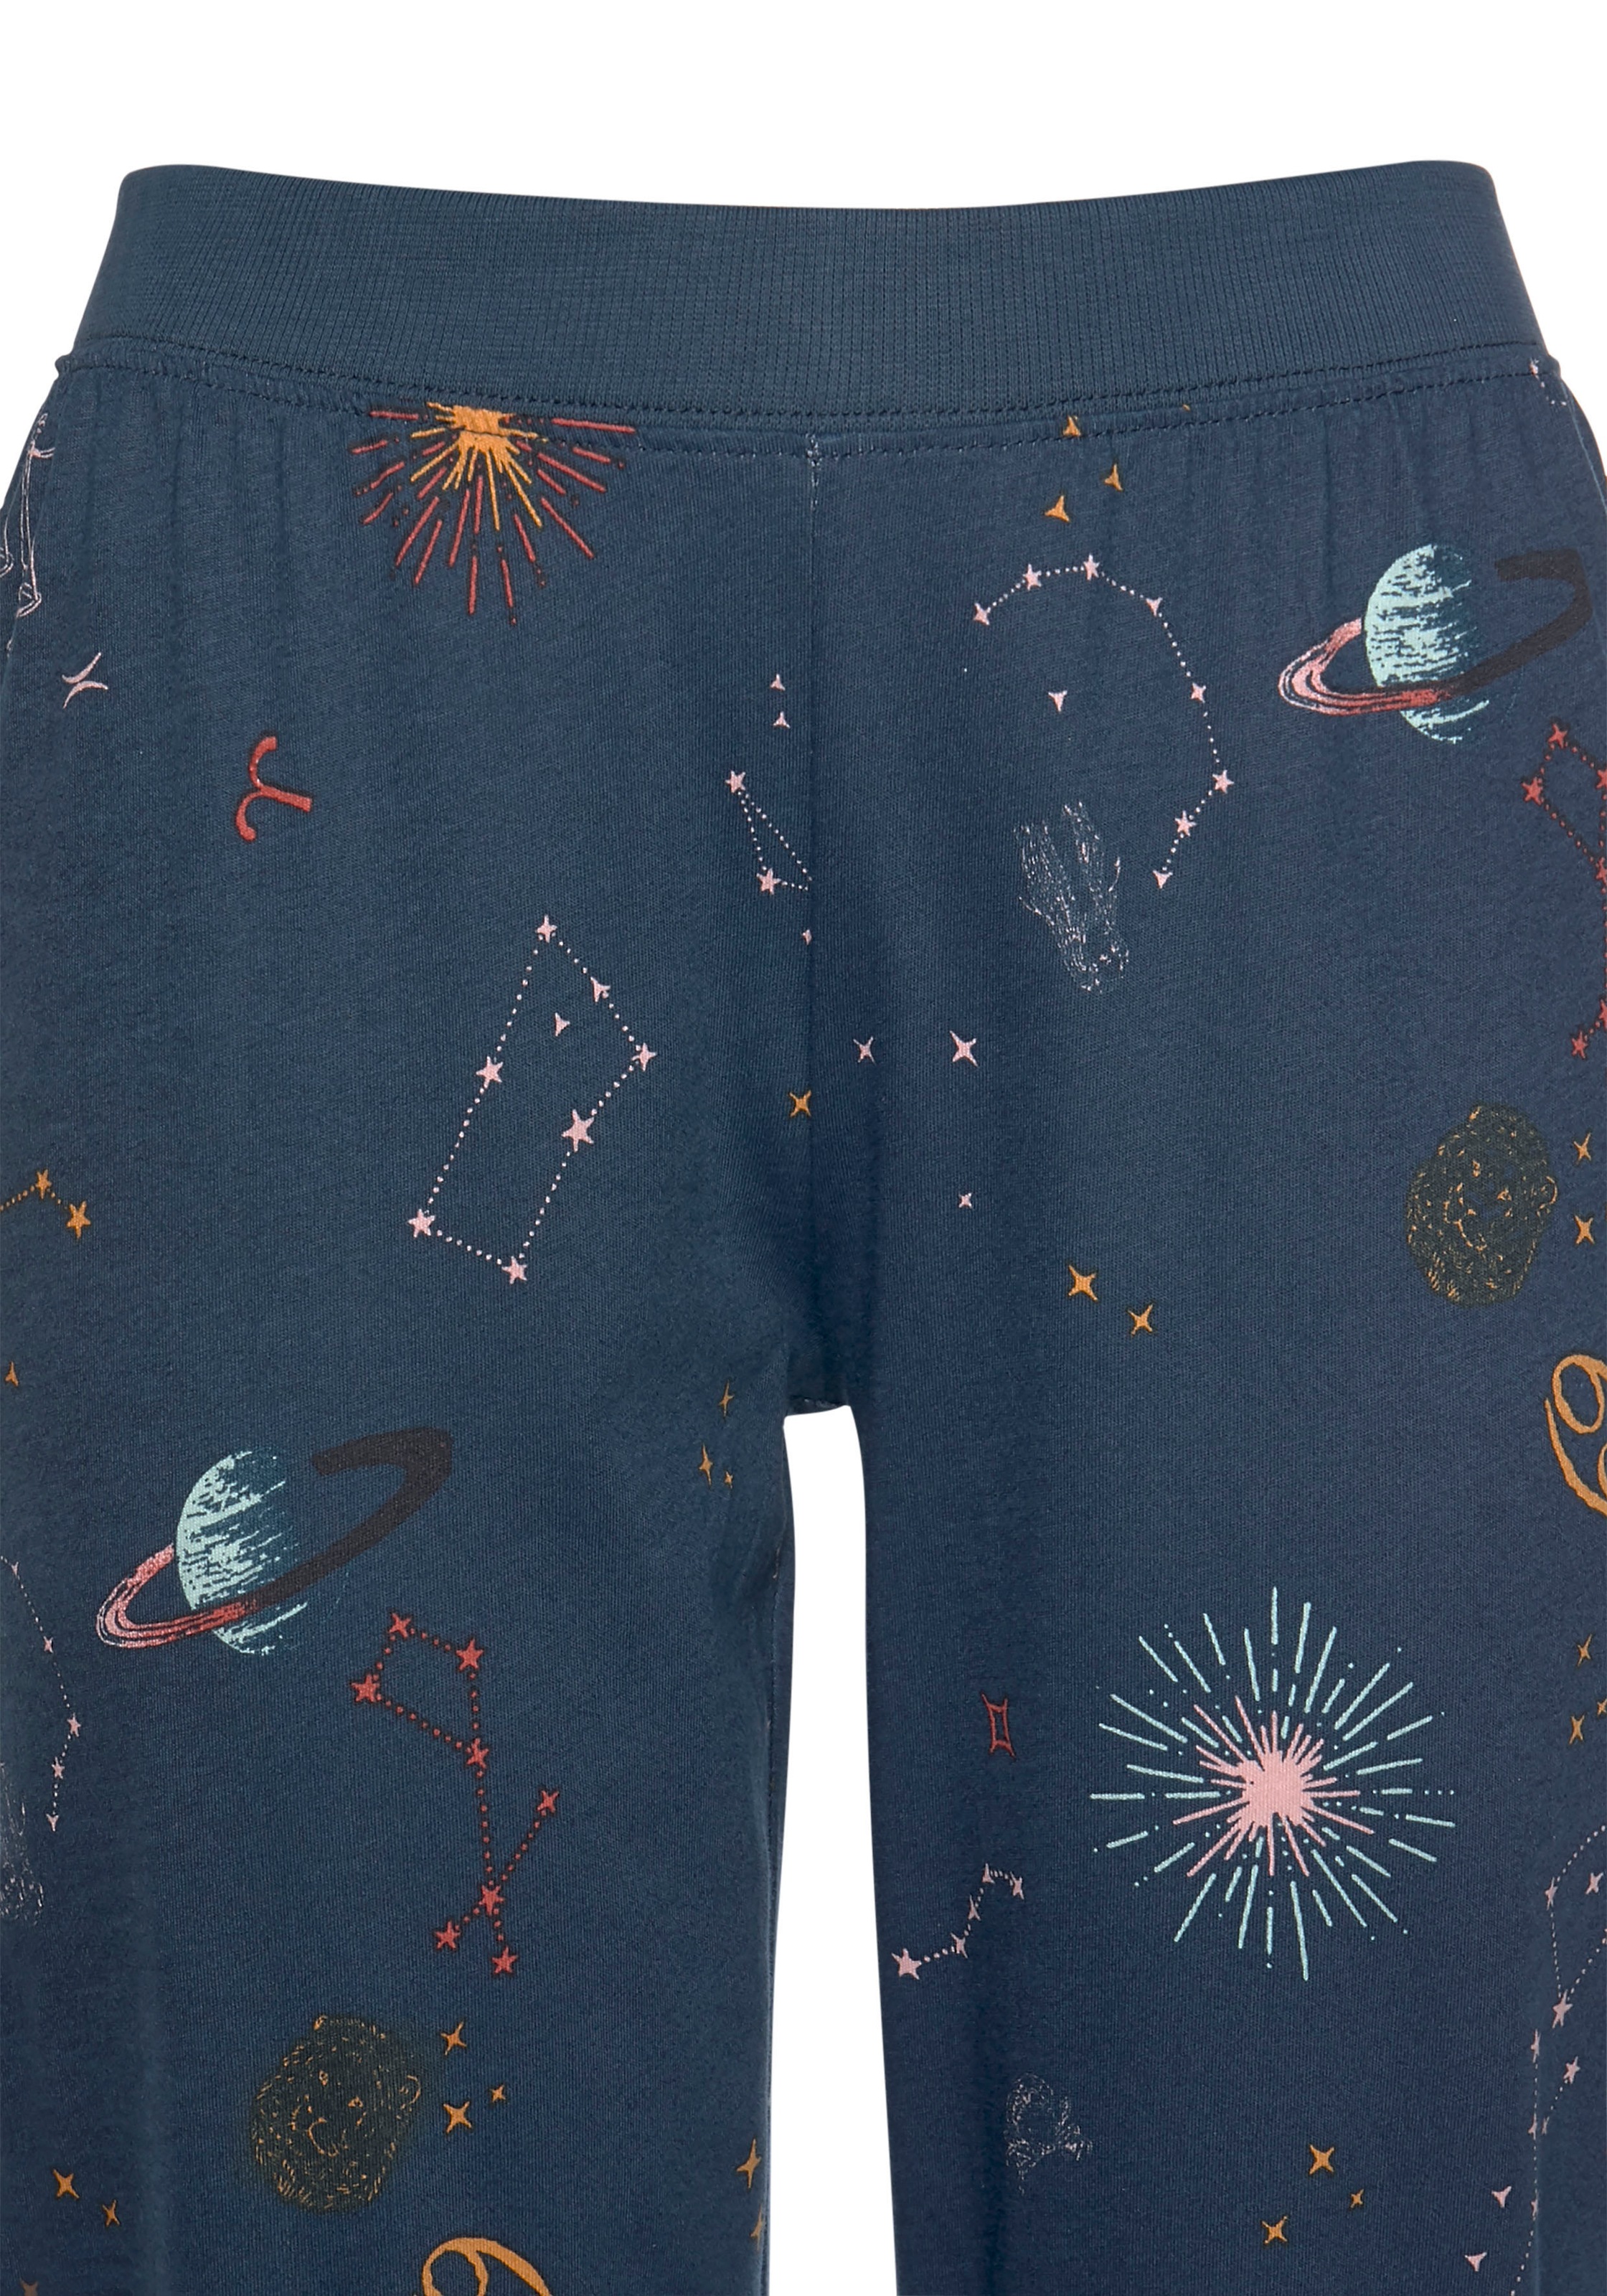 Vivance Dreams Pyjama, (2 tlg., 1 Stück), mit Galaxy-Print » LASCANA |  Bademode, Unterwäsche & Lingerie online kaufen